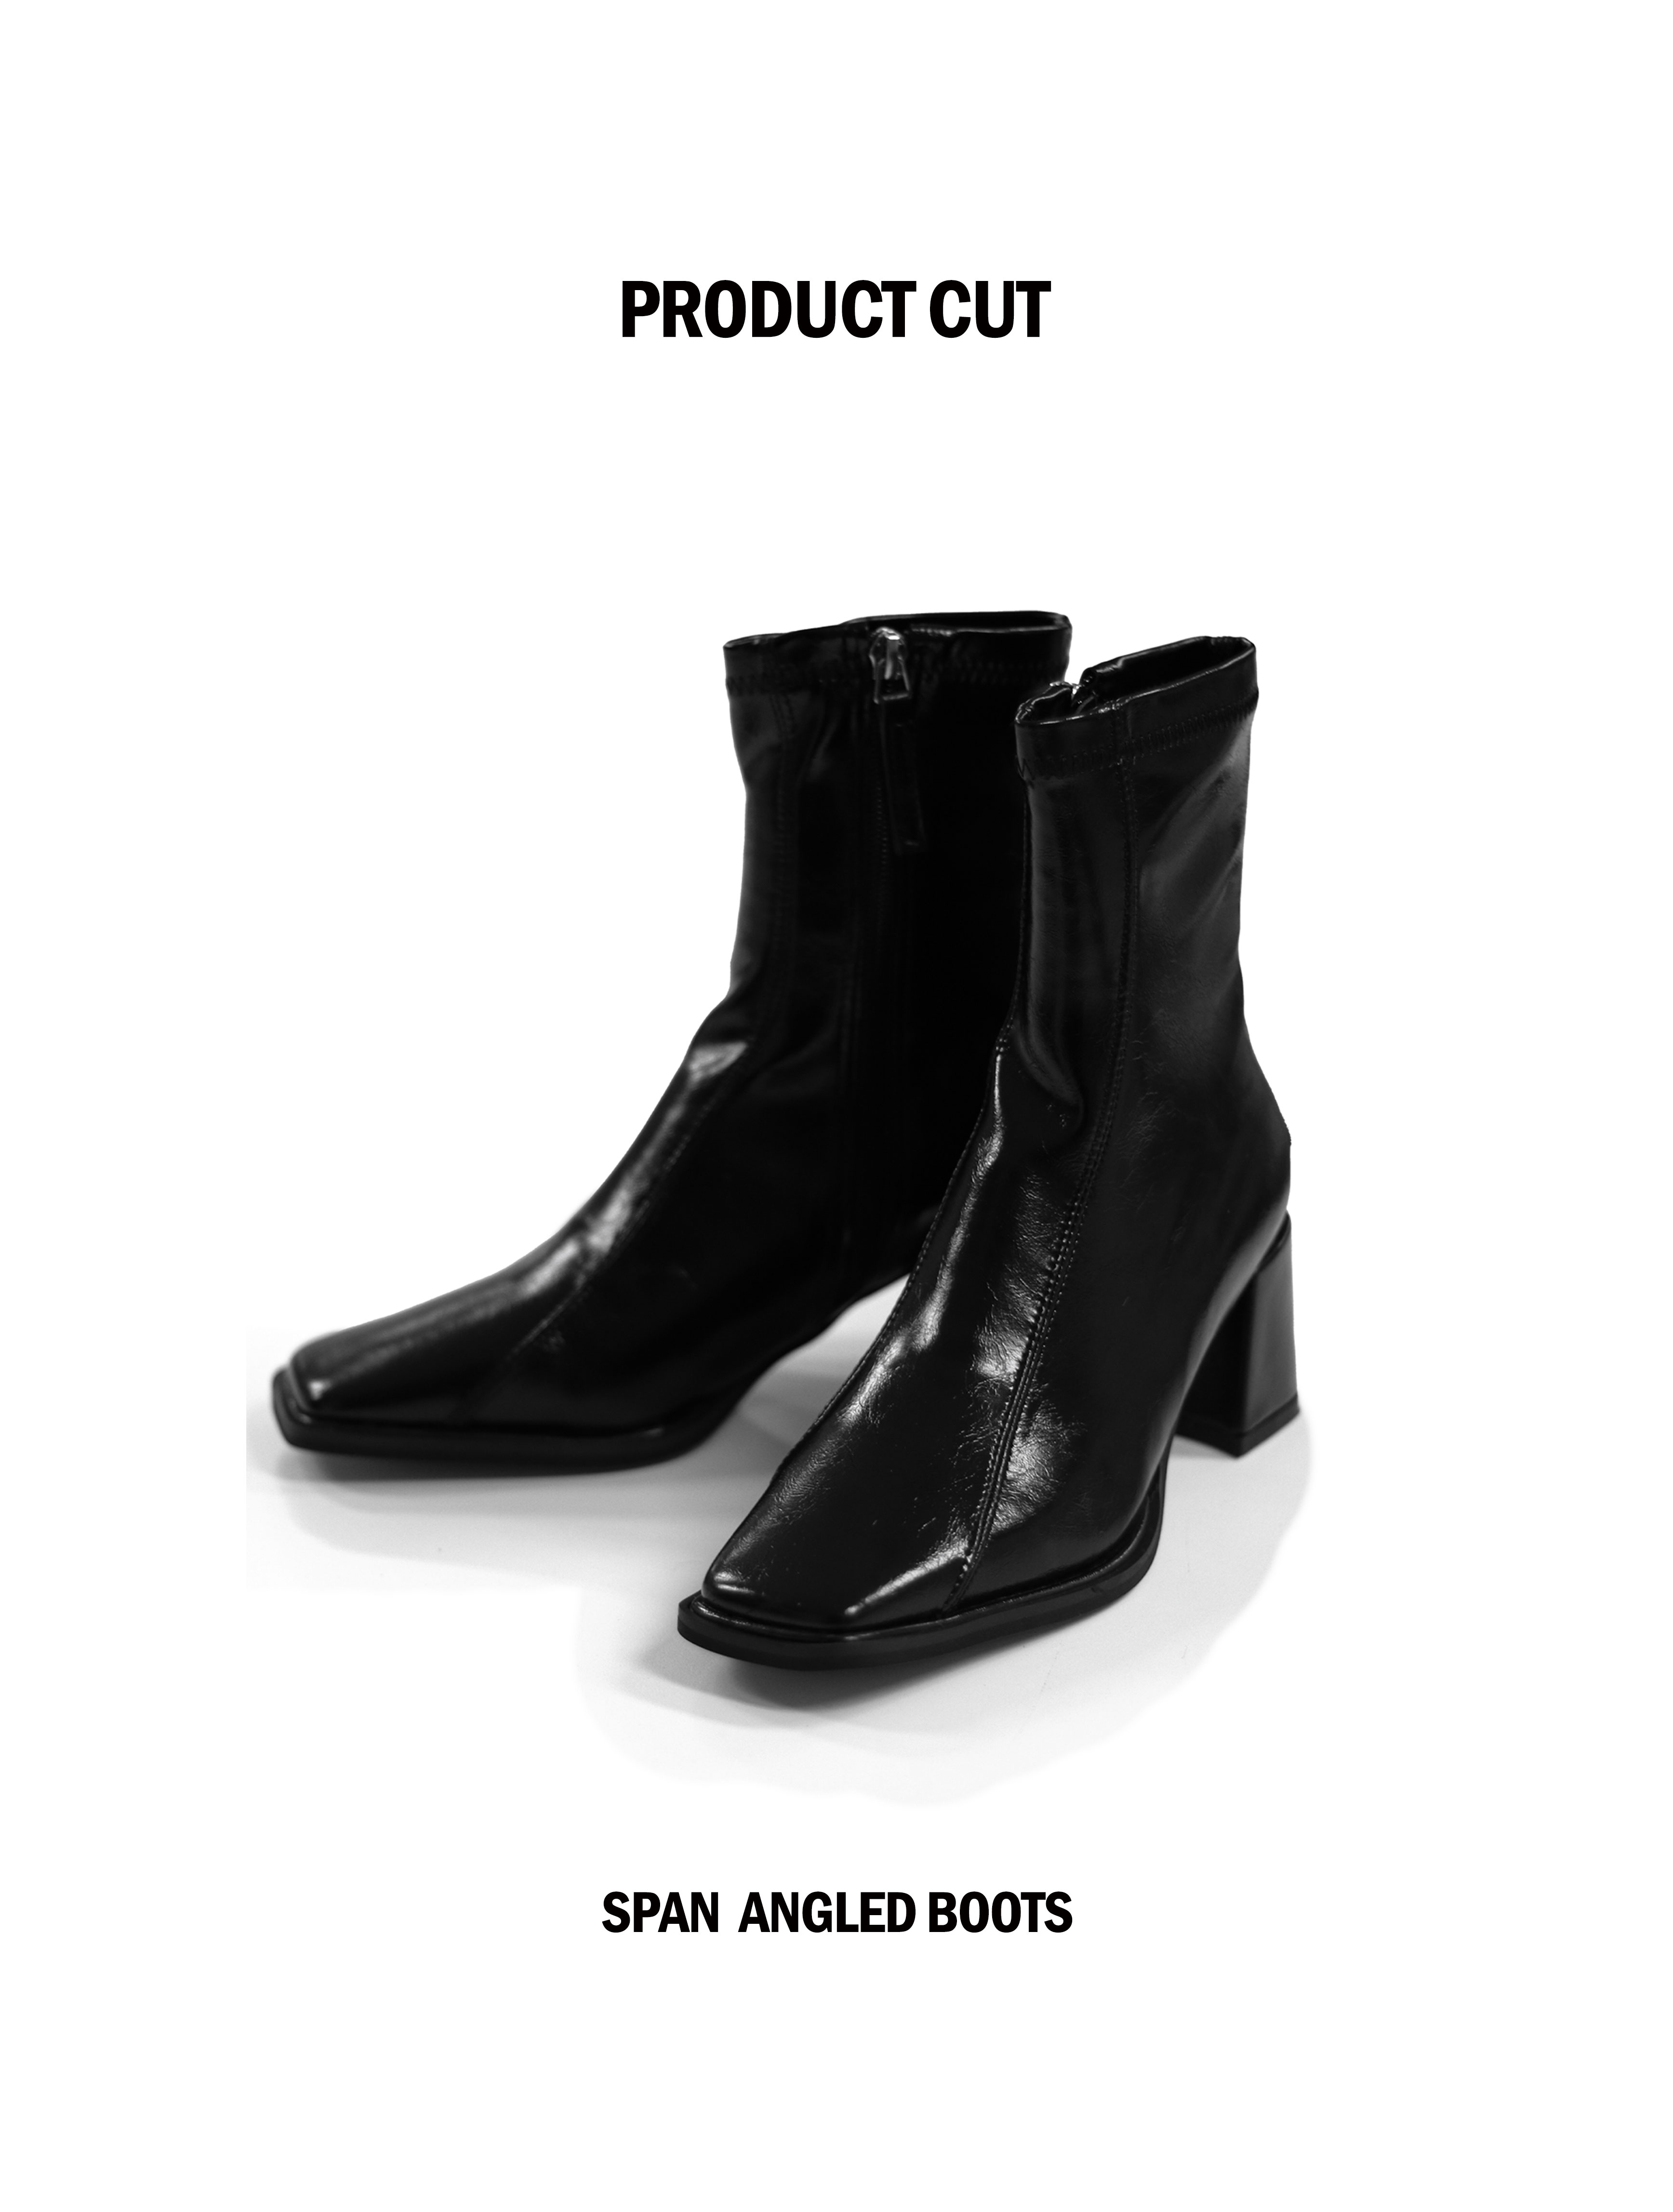 Span angled boots